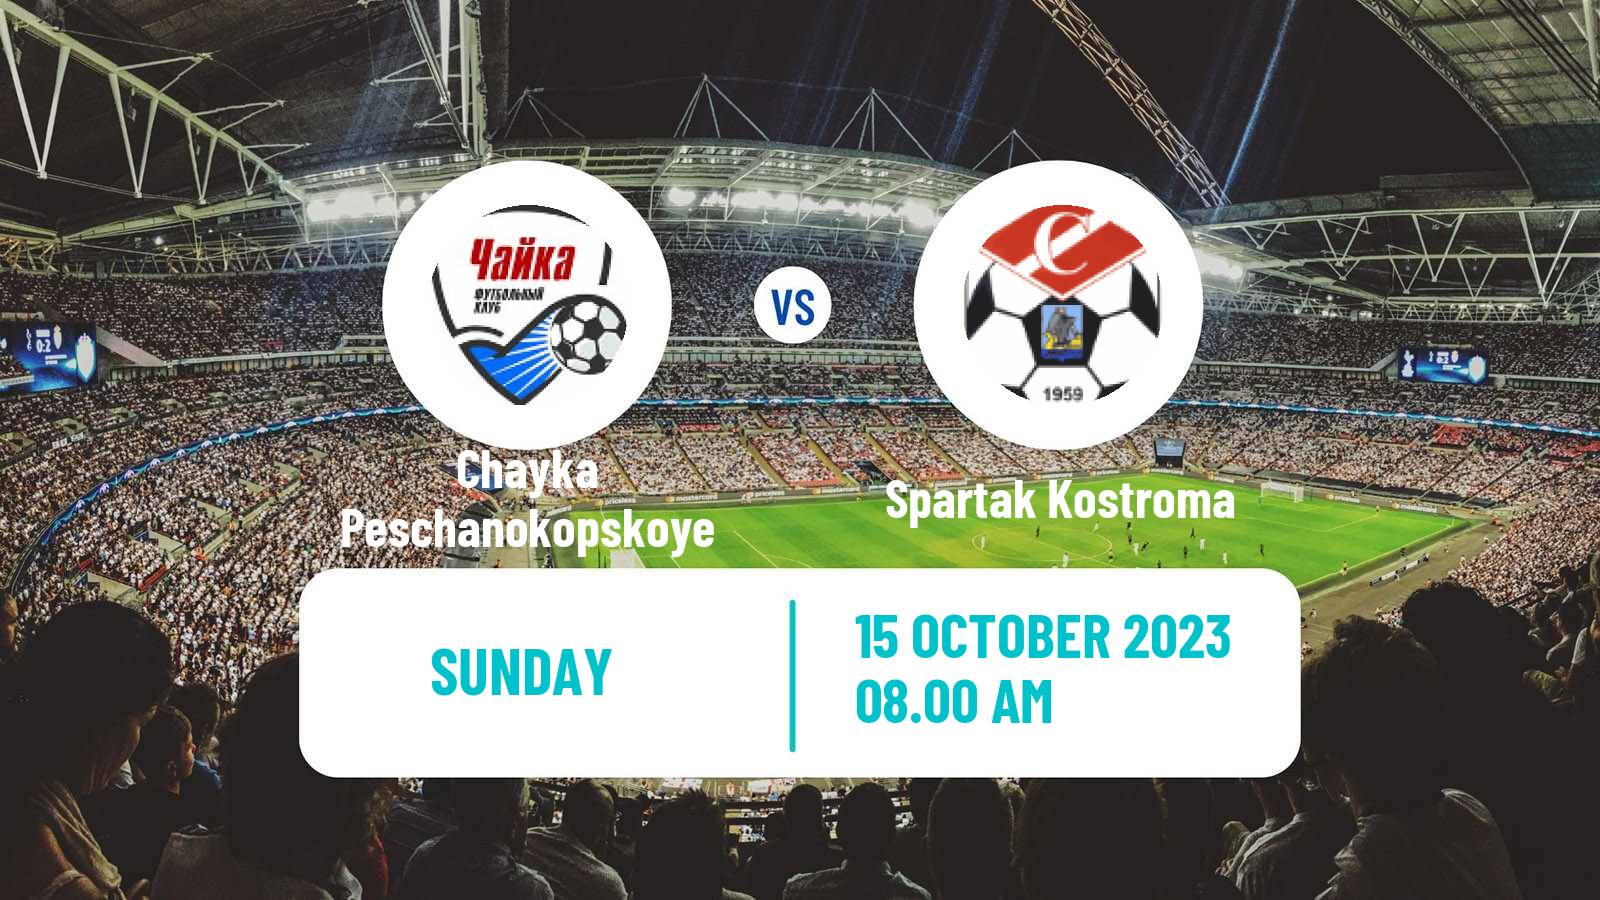 Soccer Russian FNL 2 Division A Gold Chayka Peschanokopskoye - Spartak Kostroma